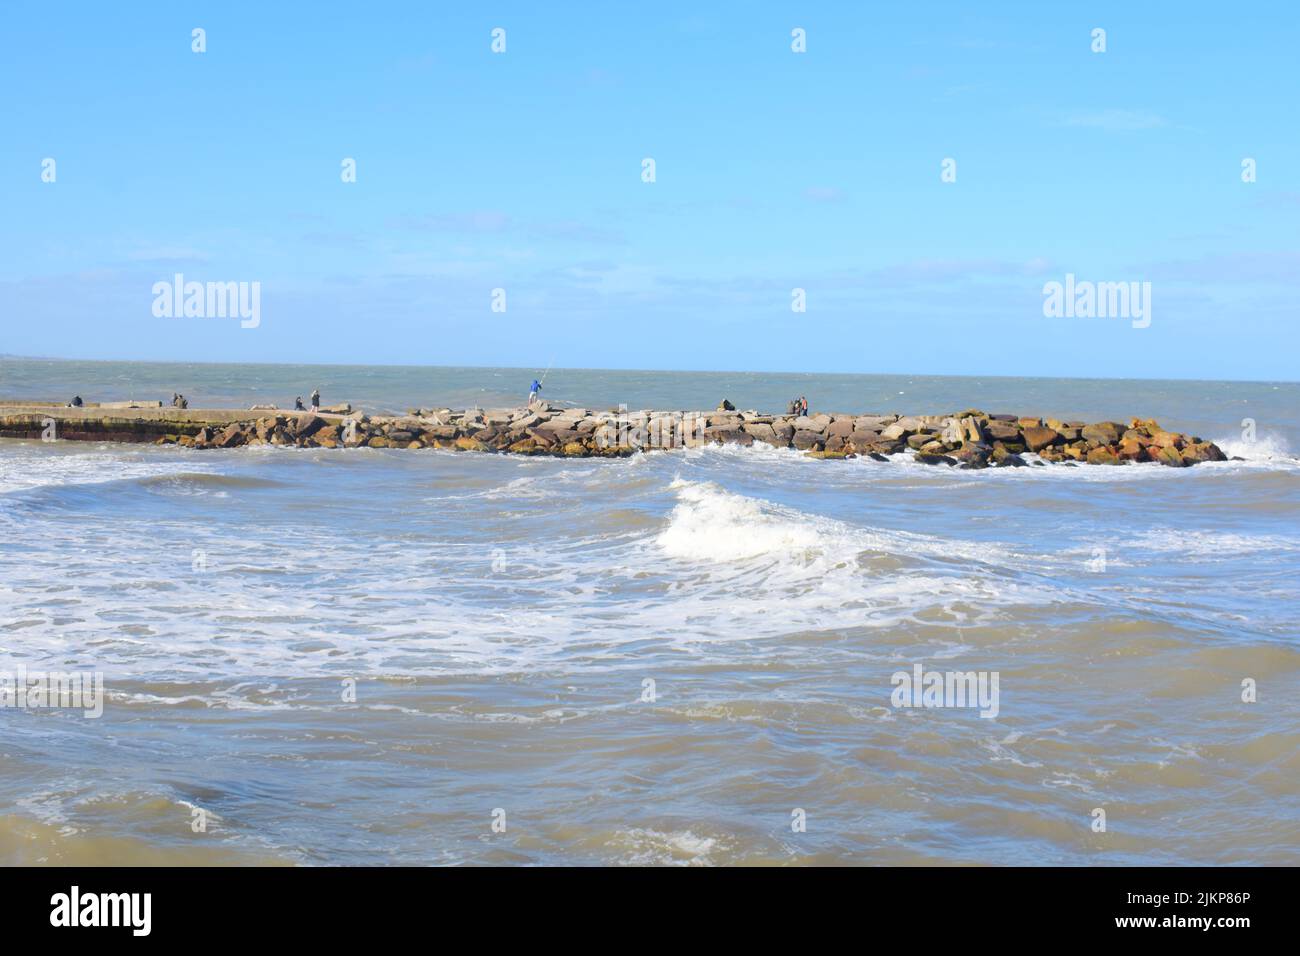 A Beautiful shot of a wavy sea crashing a sandy beach under a blue sky on a sunny day Stock Photo